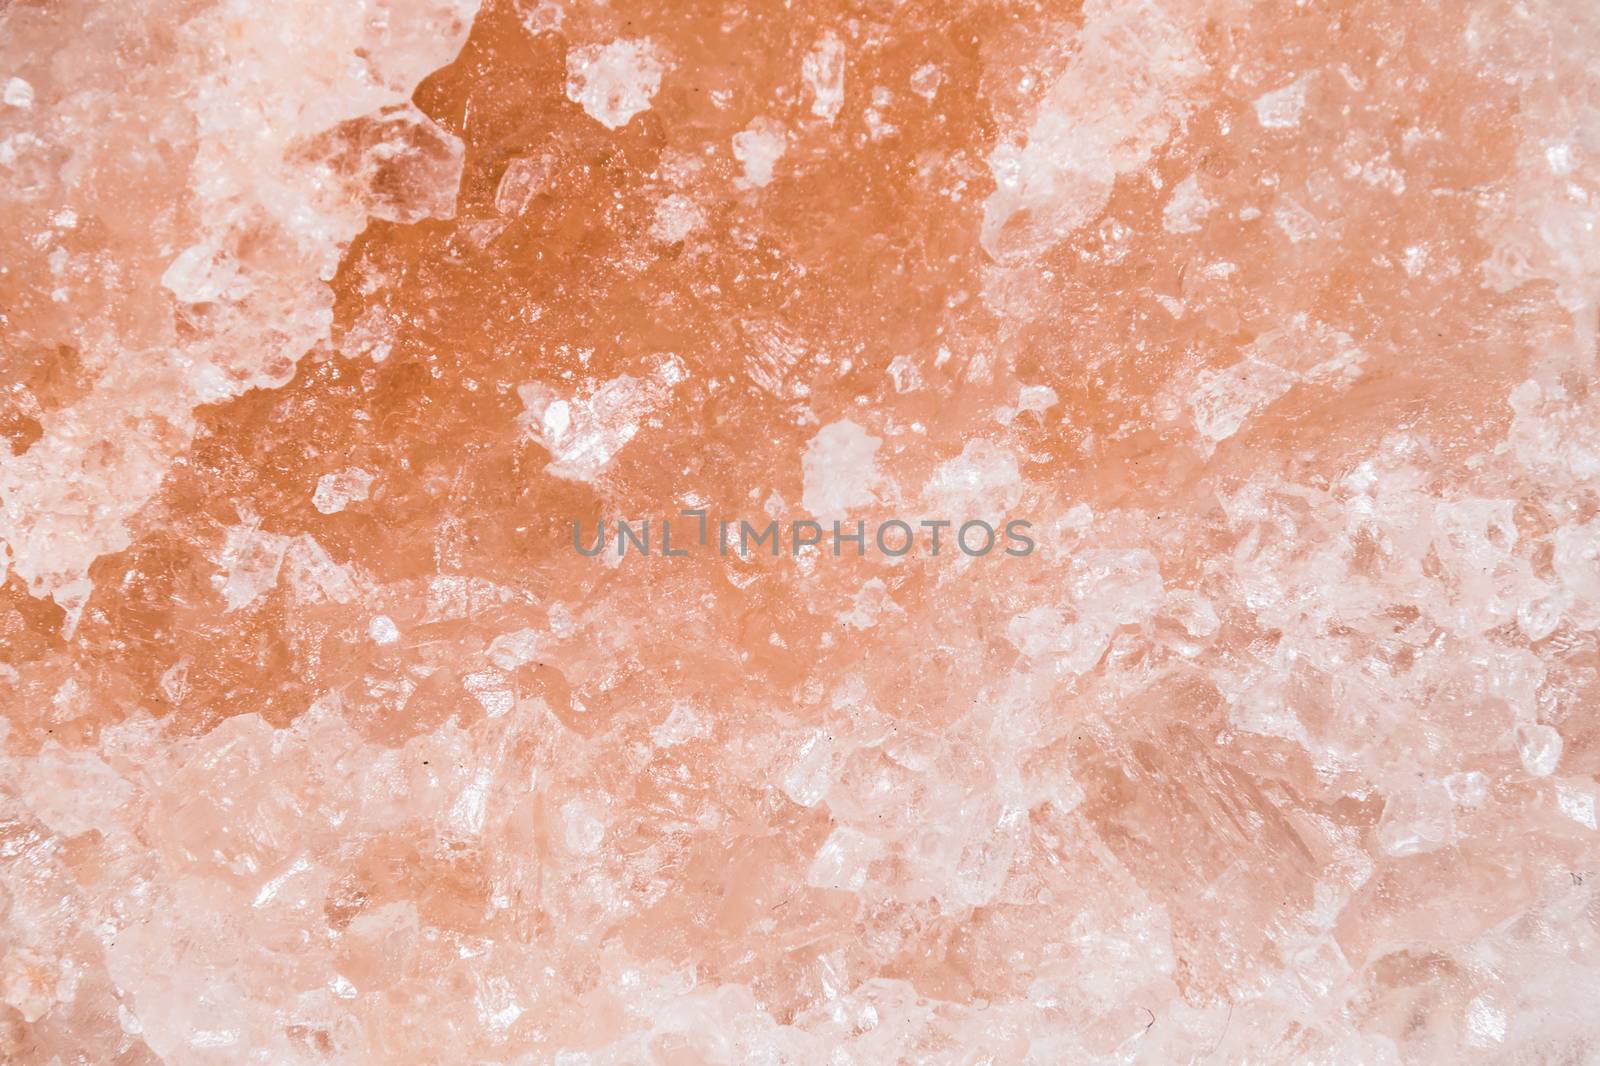 Crystal pink rose gemstone gem jewel mineral precious stone 2 by MXW_Stock